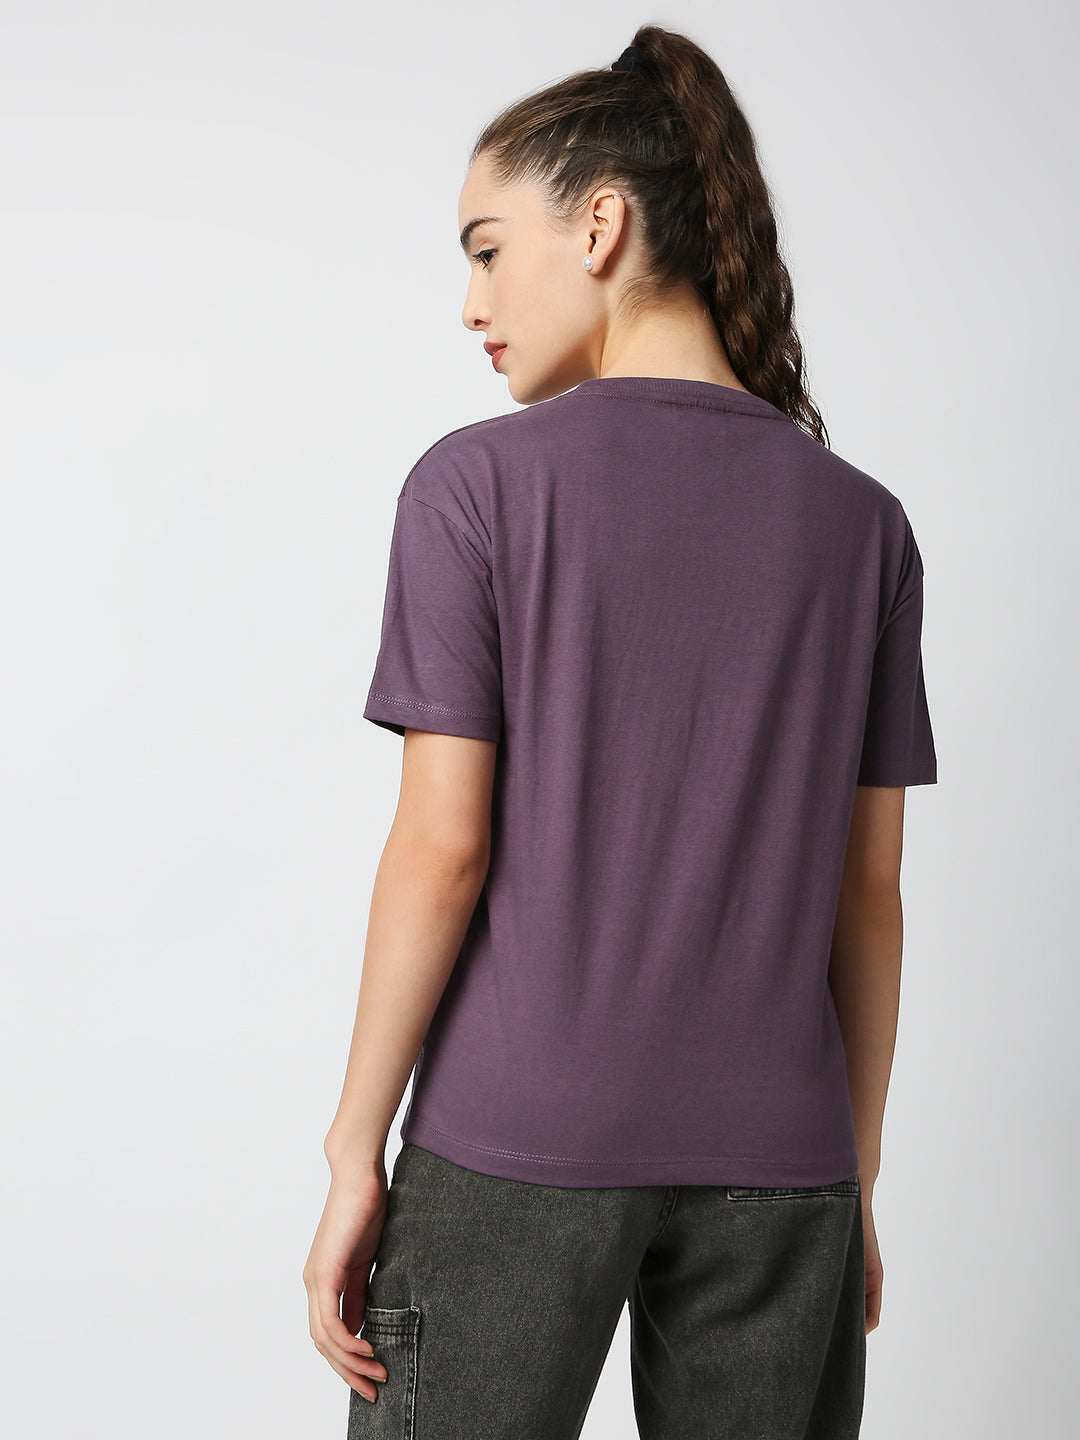 Buy Blamblack Women's Half Sleeves Lavender Color T Shirt